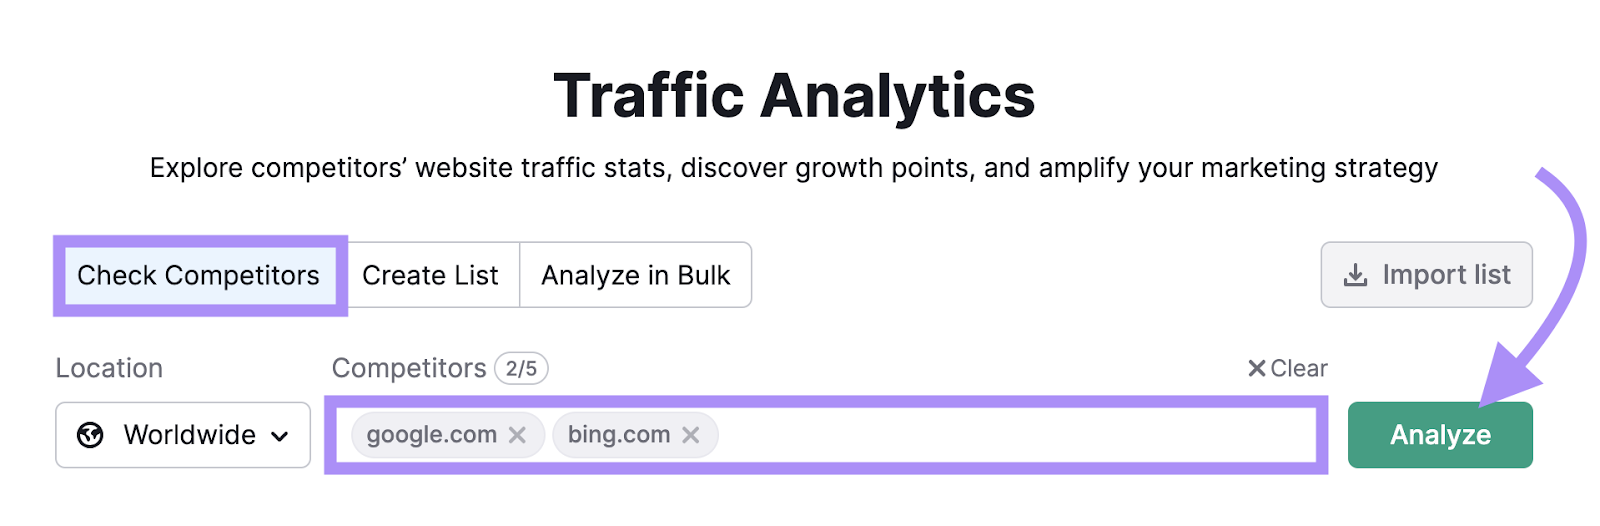 "google.com," and "bing.com" entered into Traffic Analytics search bar